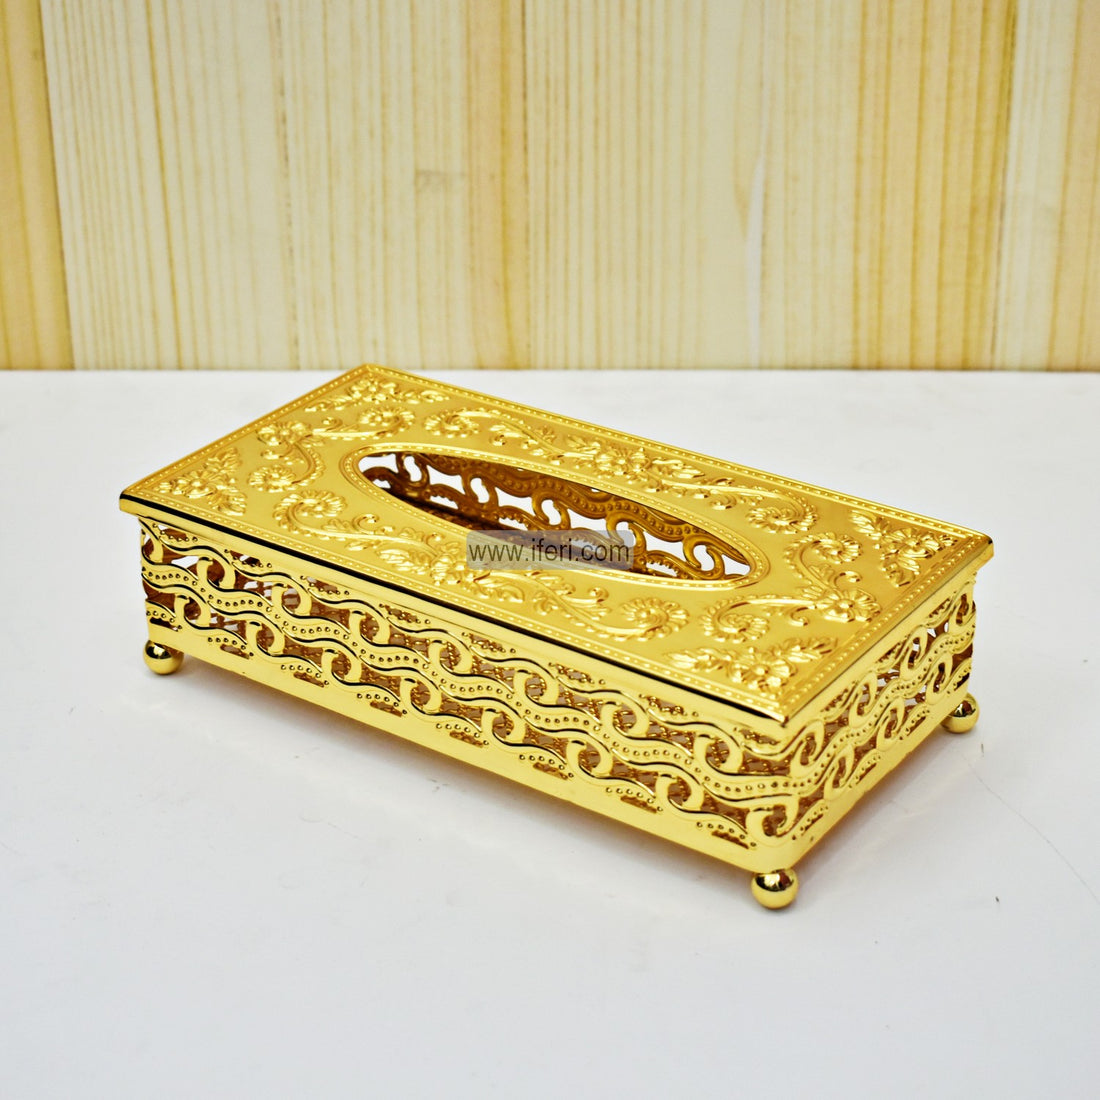 Buy Decorative Metal Tissue Box through online from iferi.com 